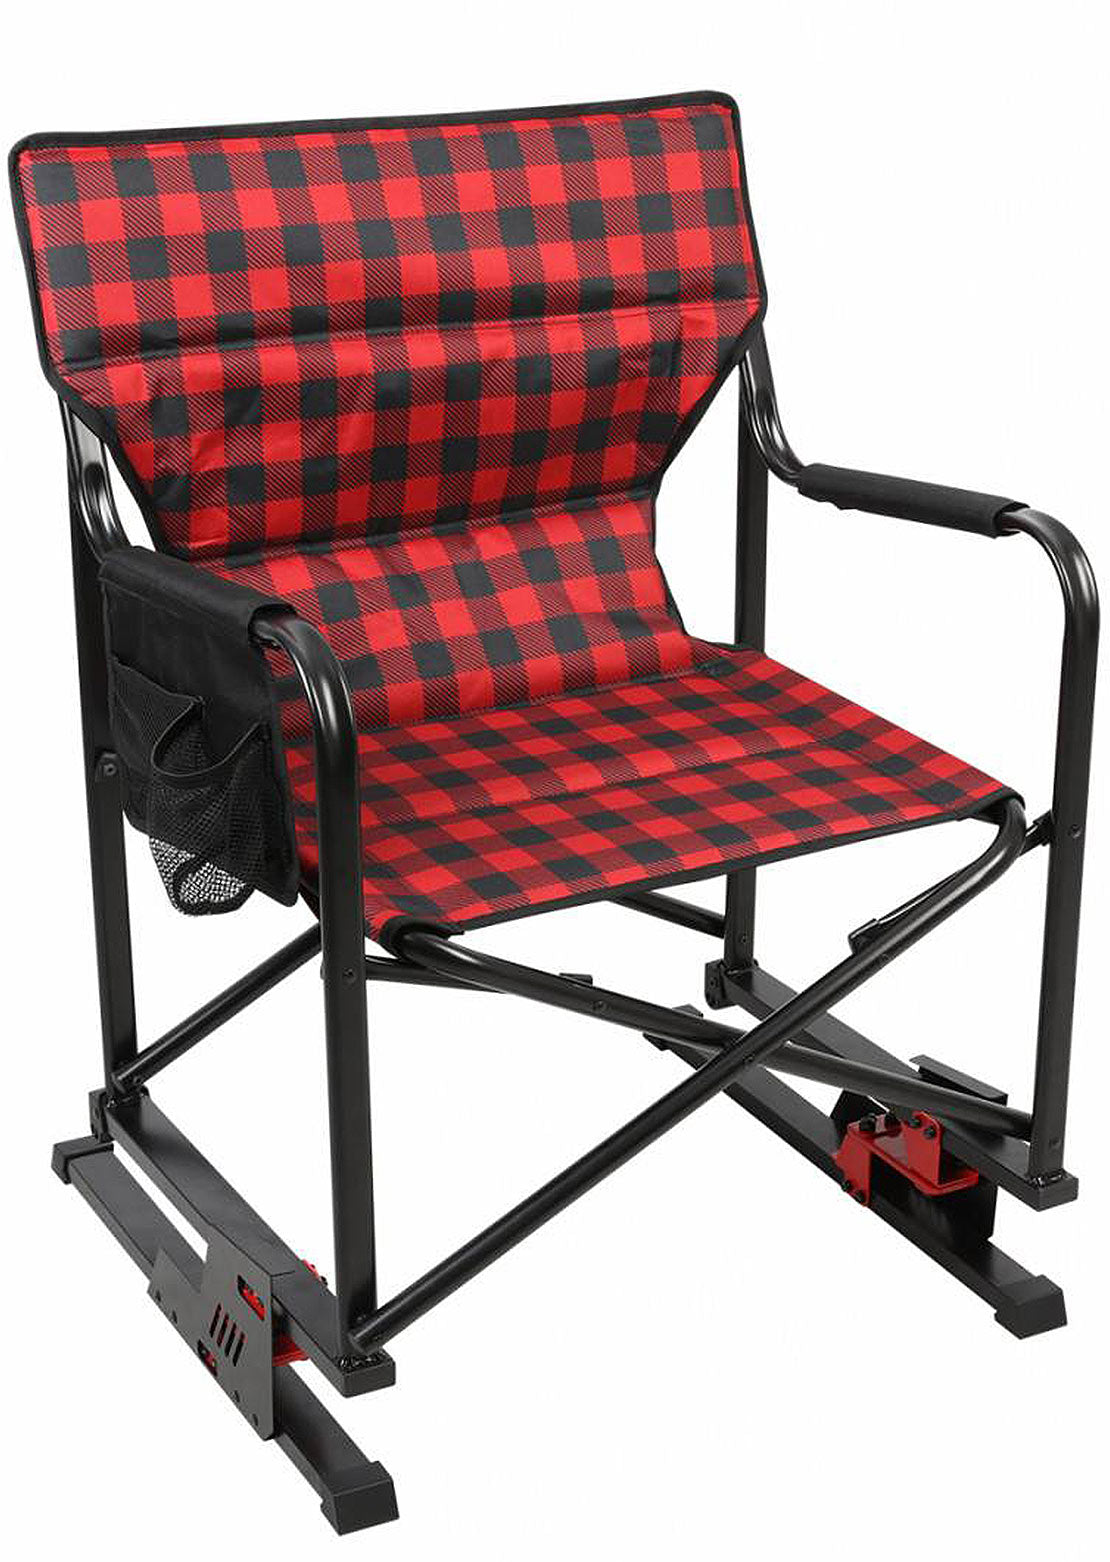 Kuma Outdoor Gear Spring Bear Chair - Quad Fold Red/Black